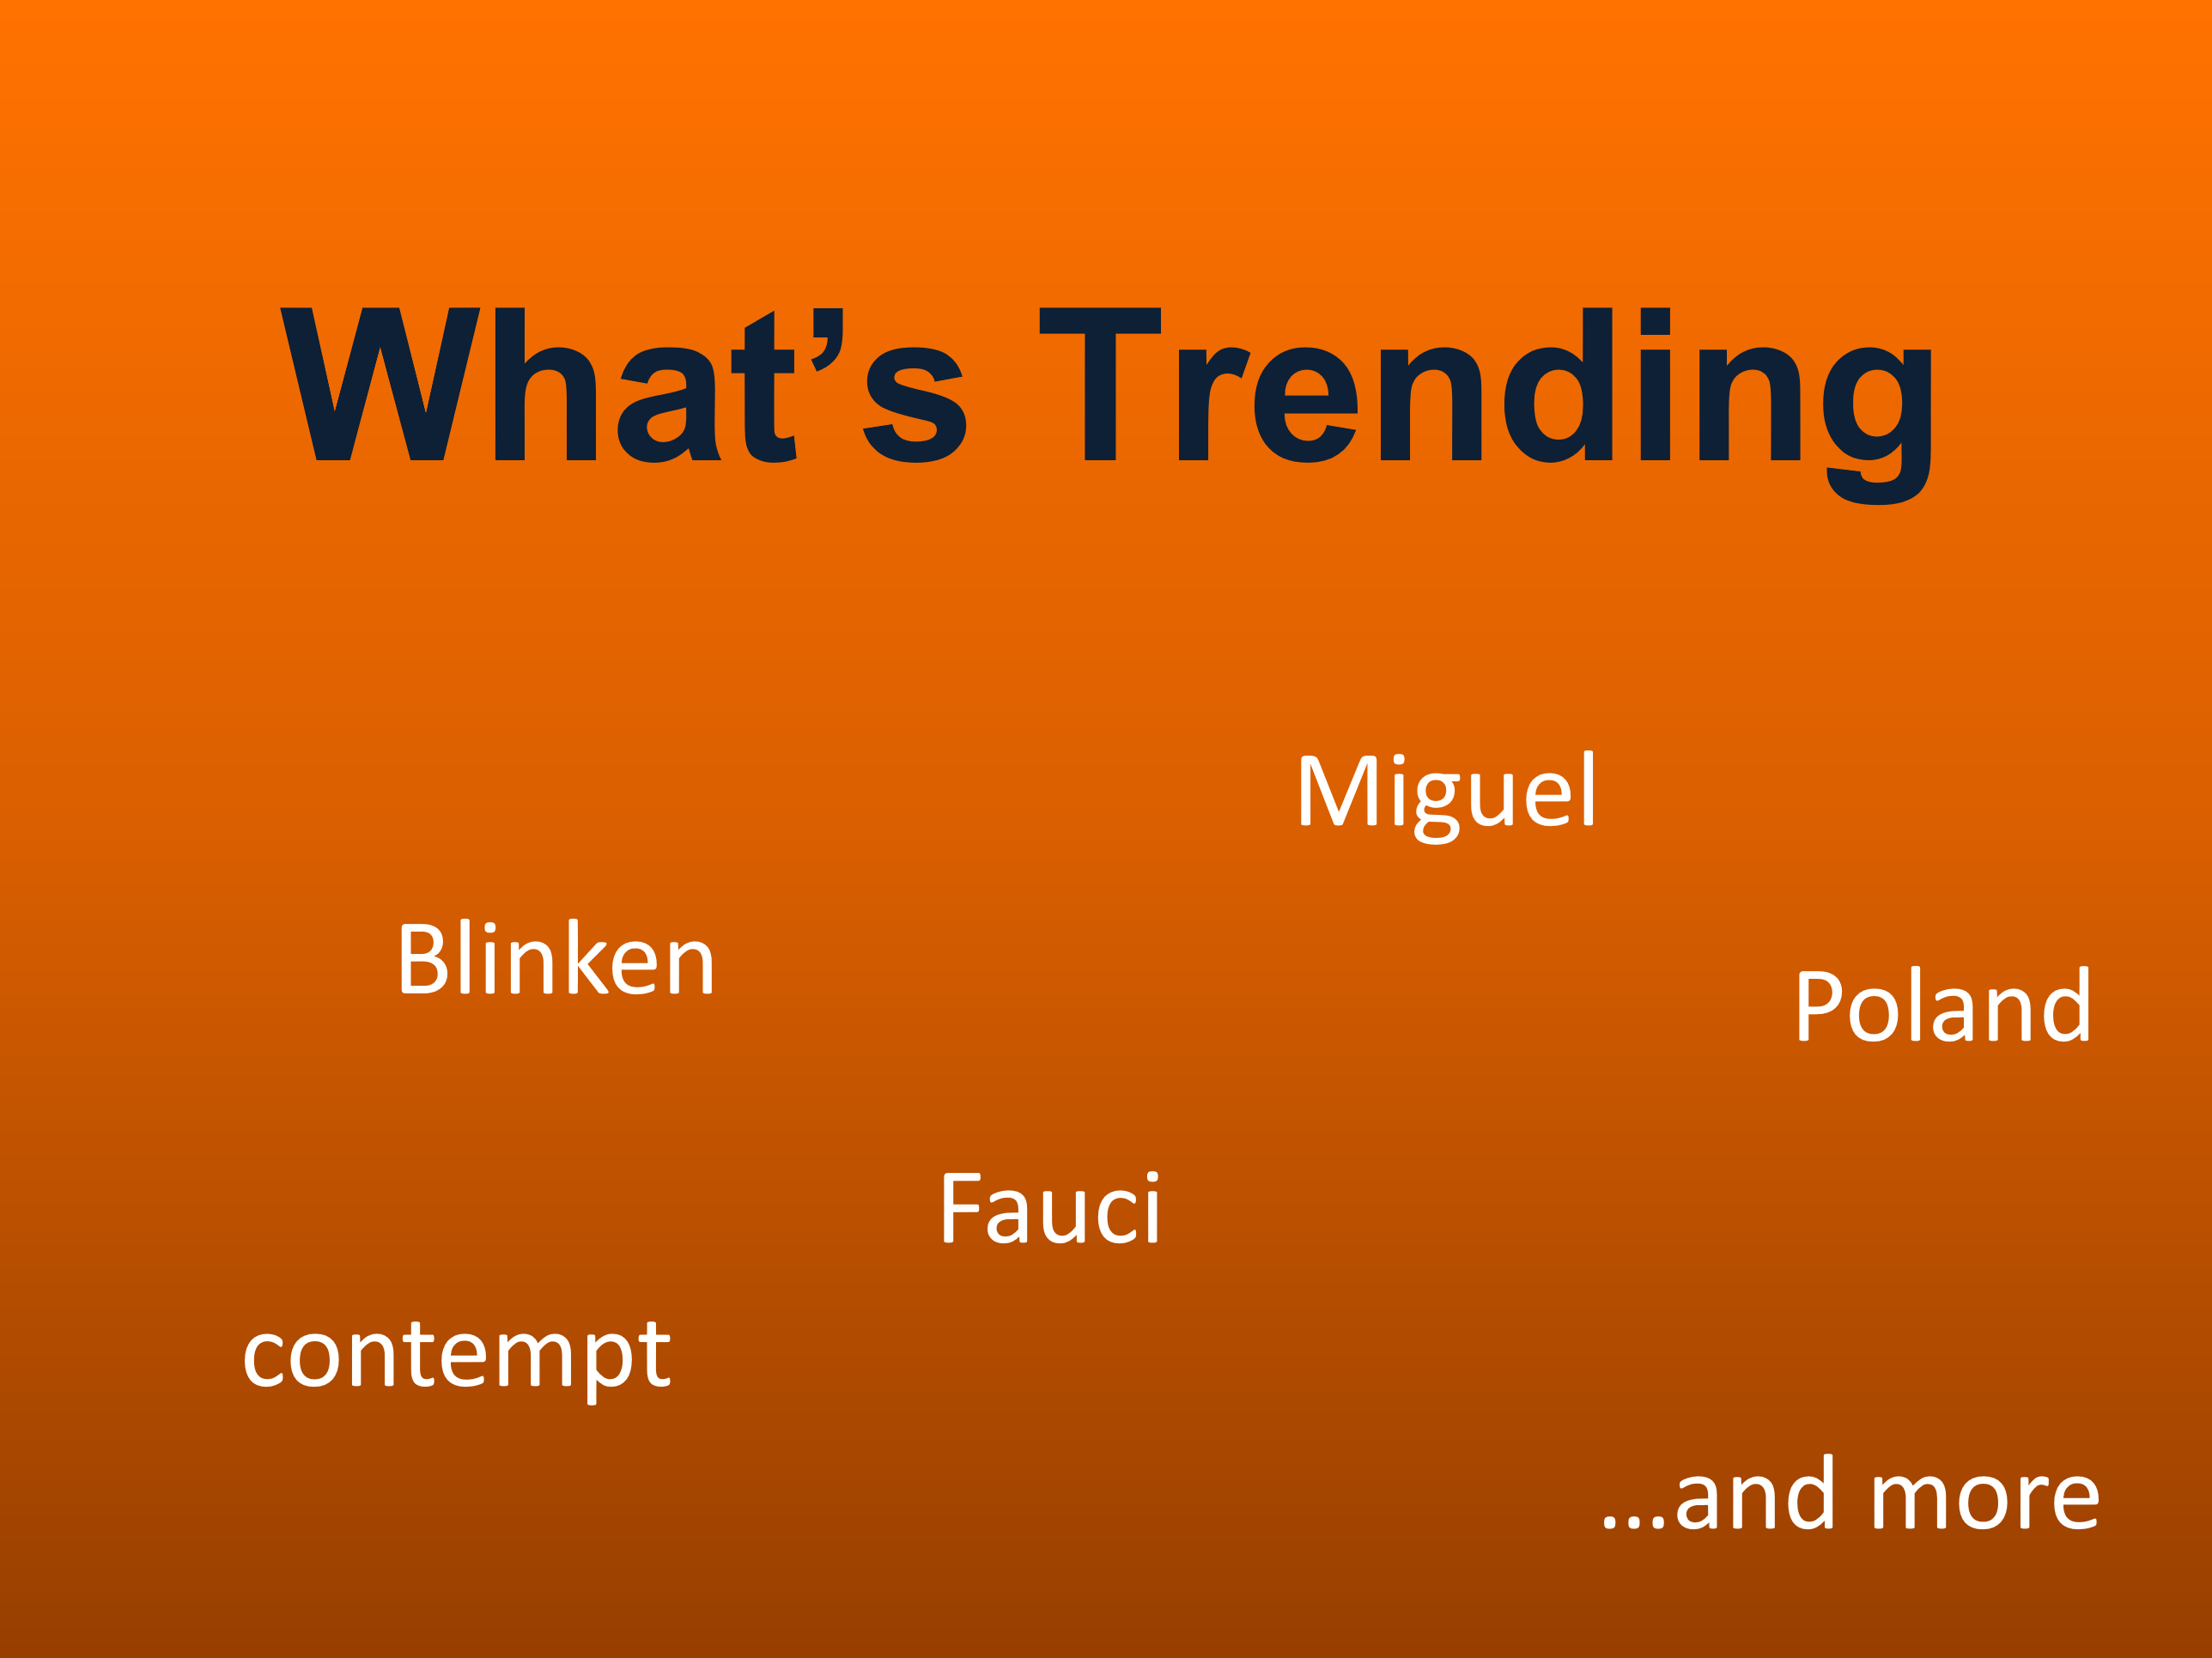 4/29/22 What's trending this week